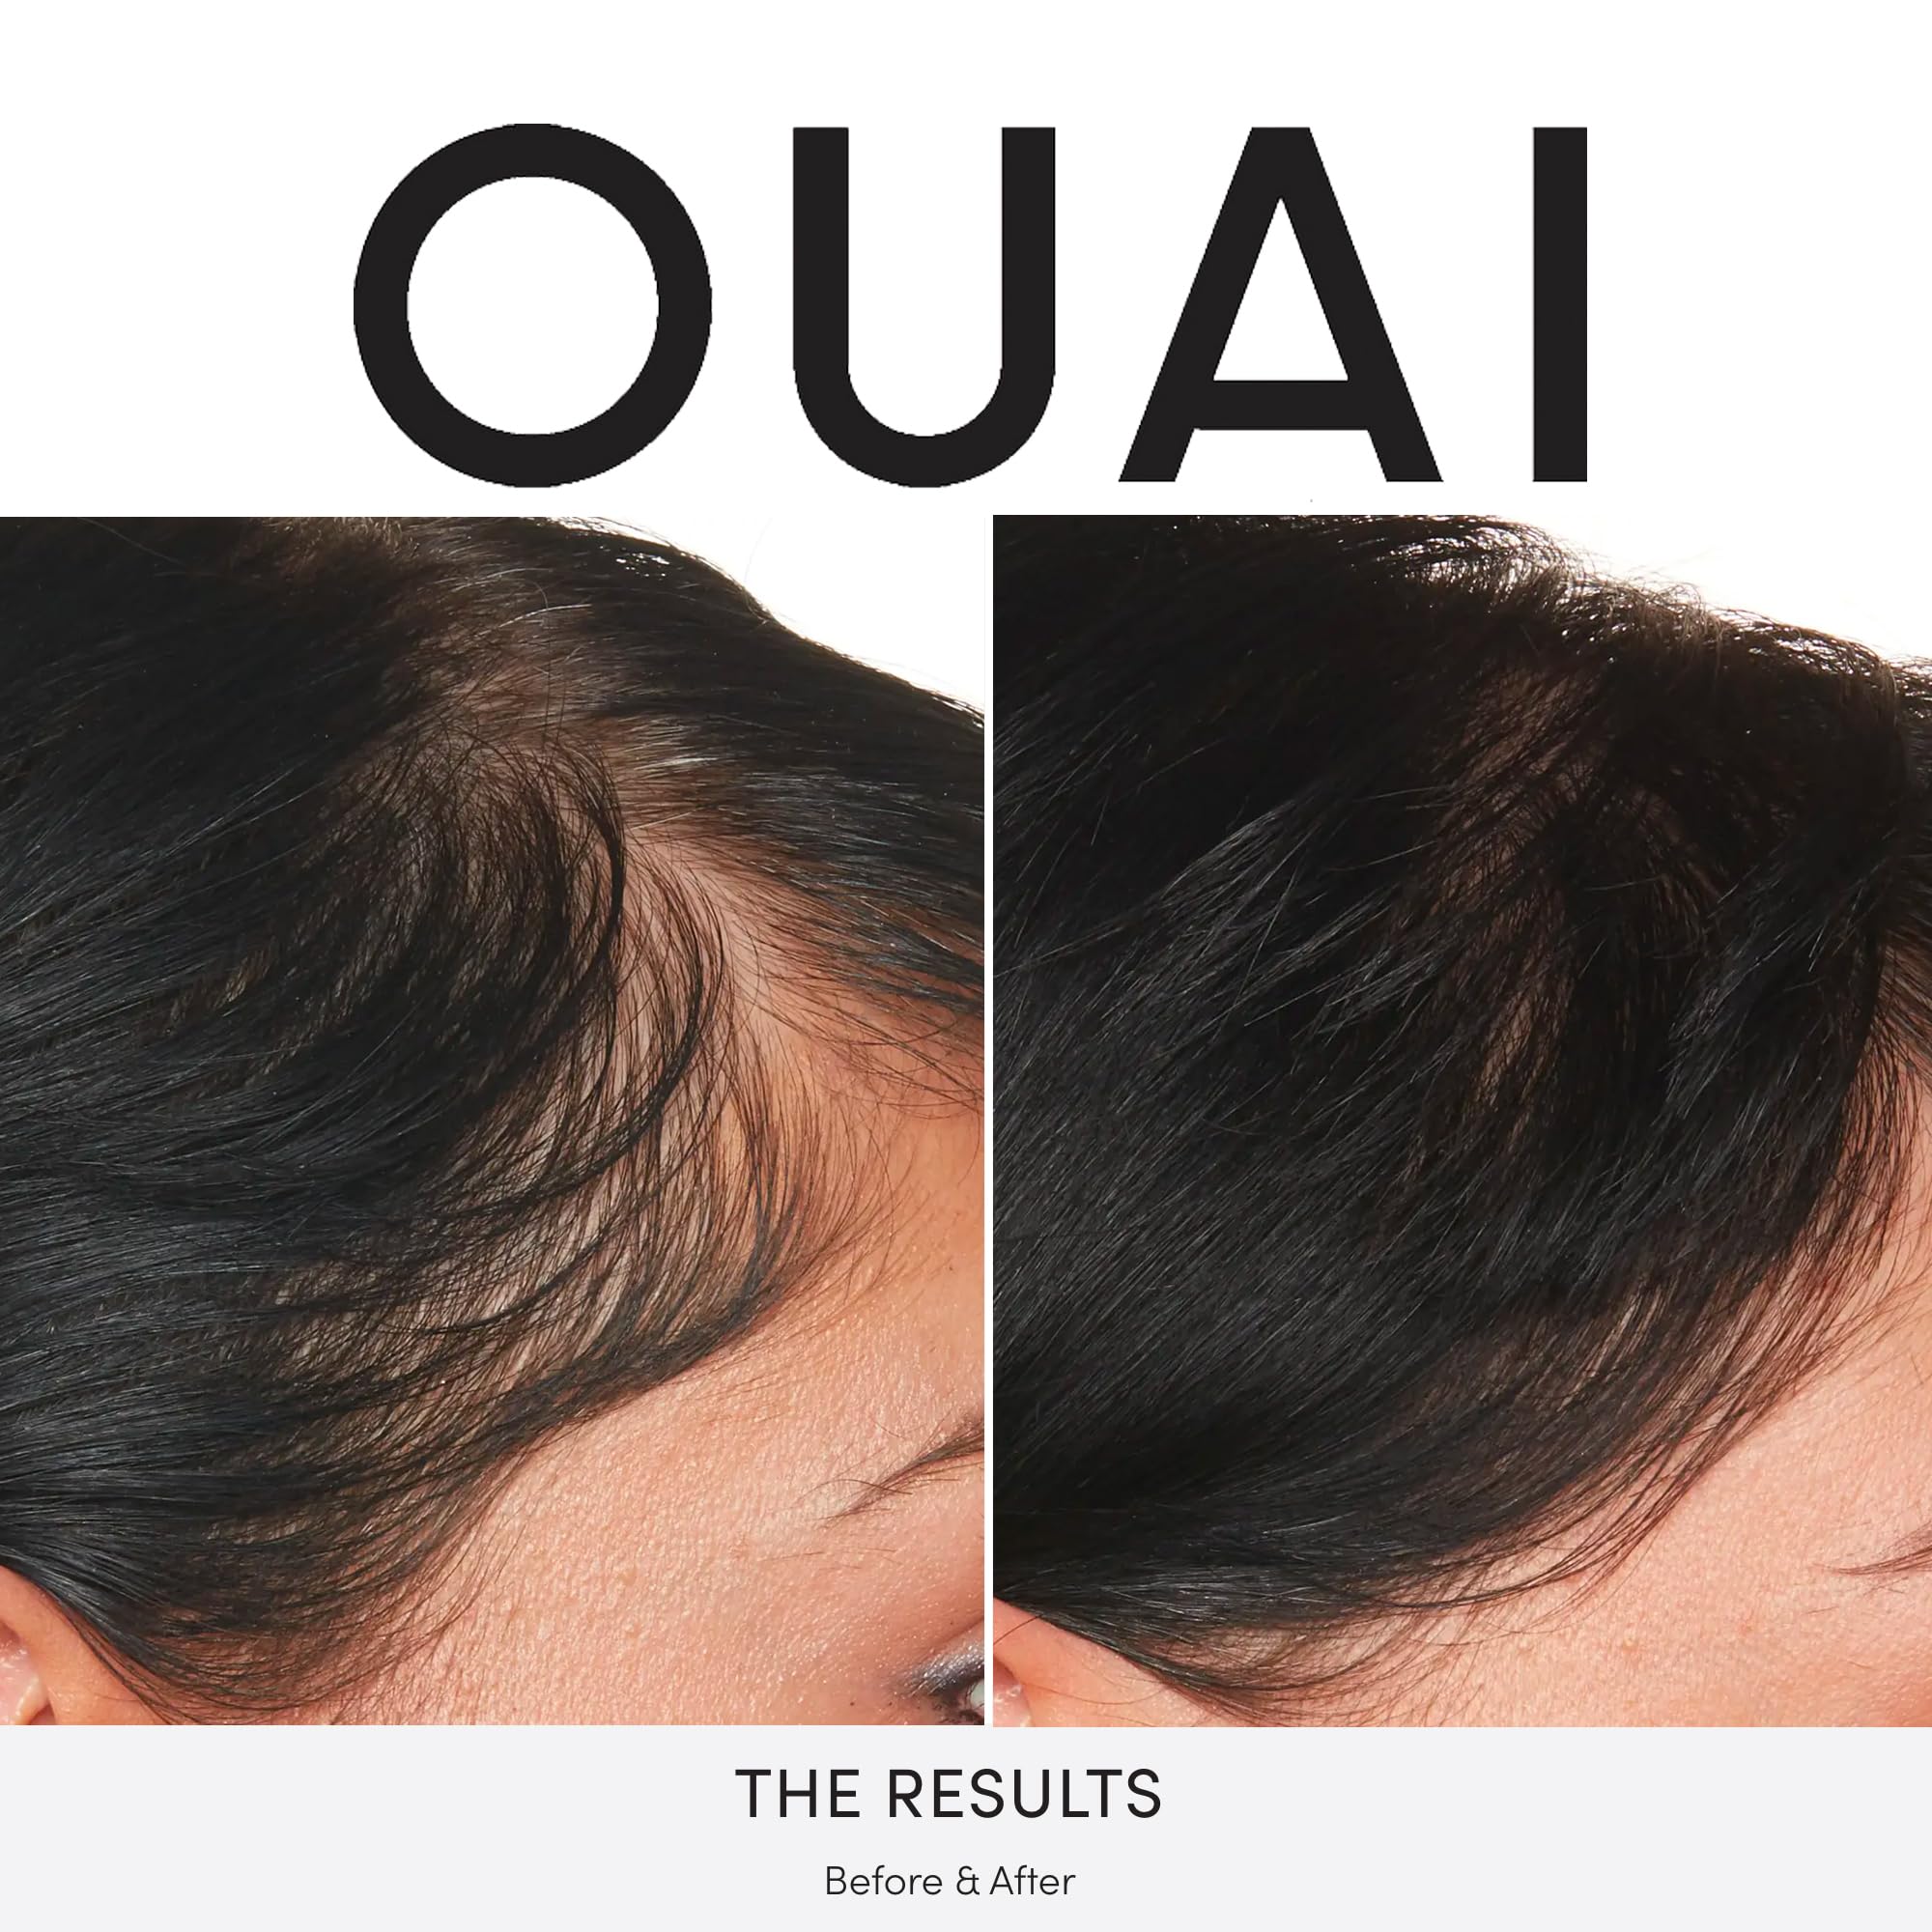 OUAI Scalp Serum - Balancing, Hydrating Formula for Thicker, Fuller-Looking Hair - 2 fl oz